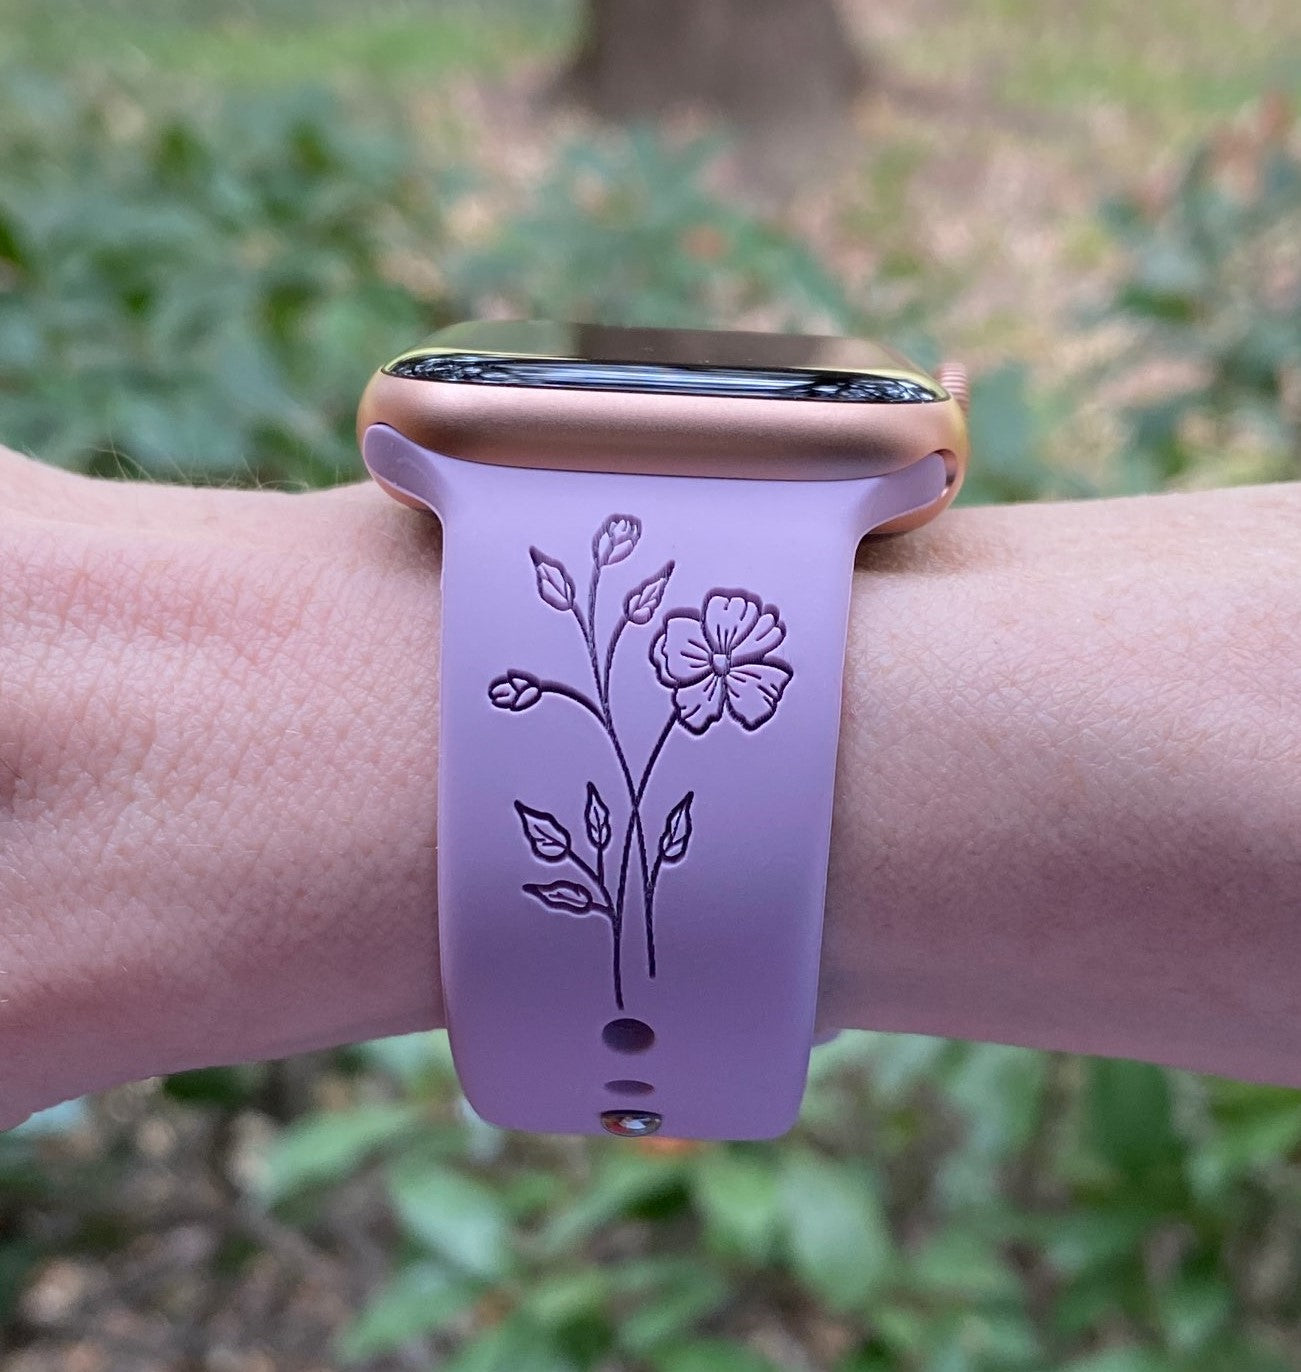 Spring Flower Apple Watch Band